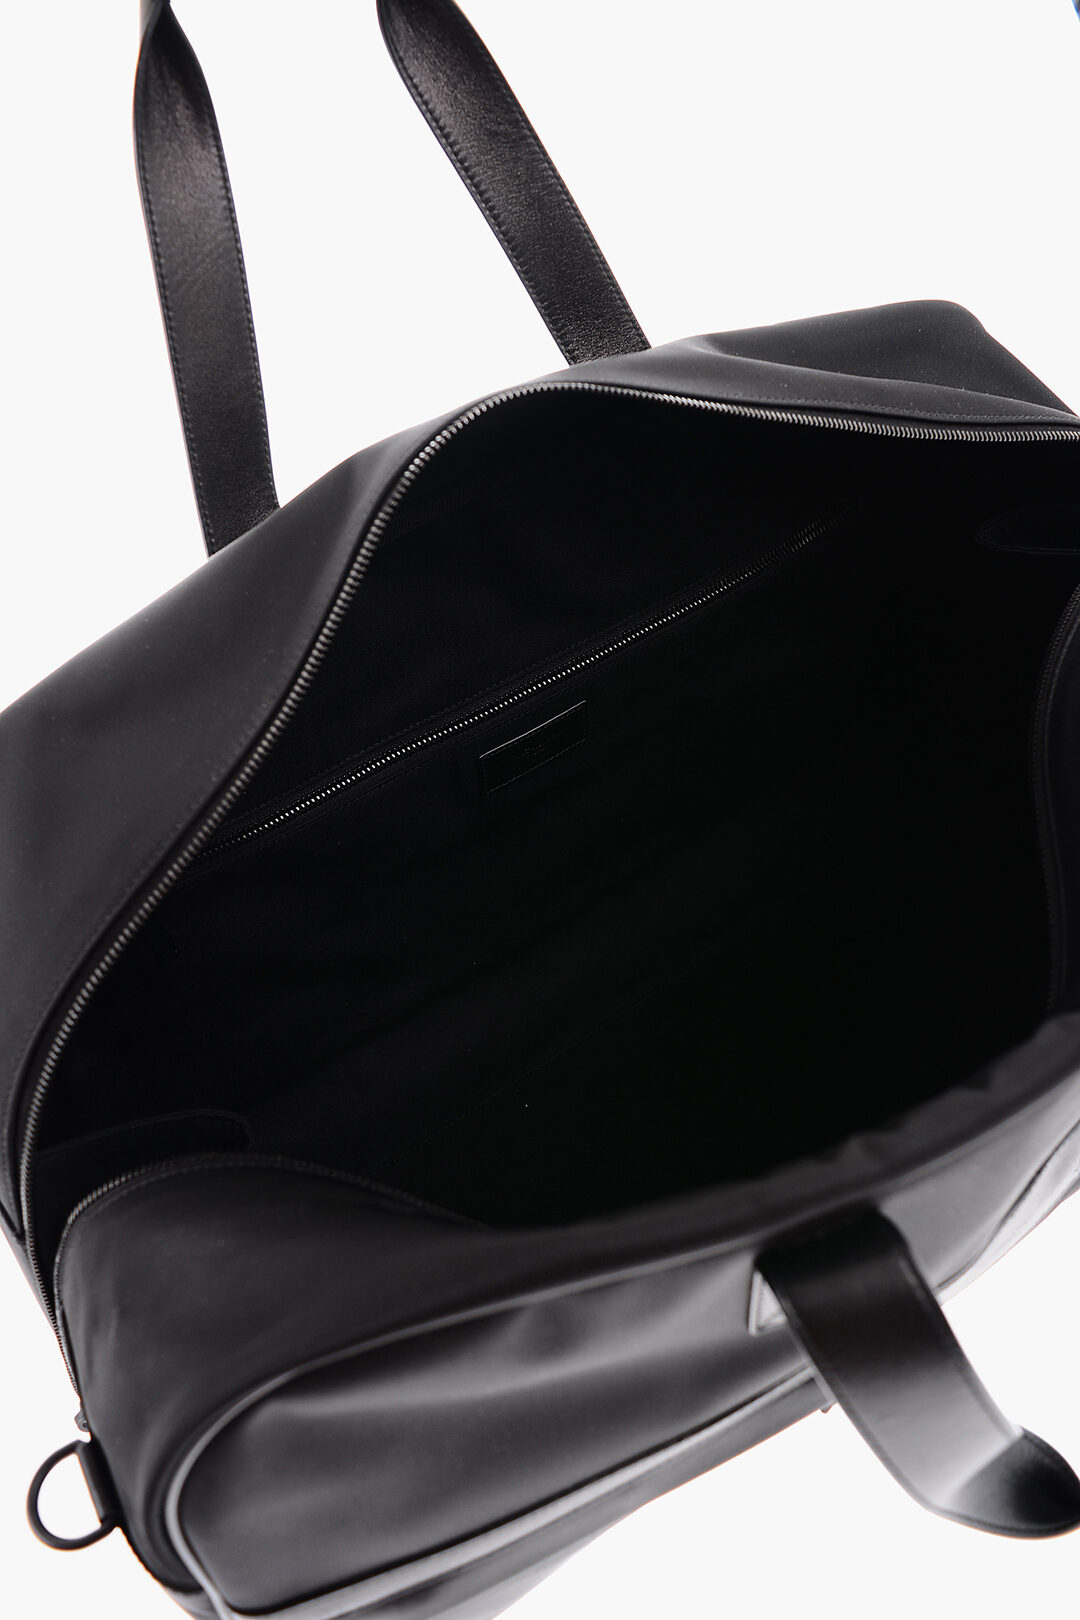 Aeródromo Galaxia Abandonado Saint Laurent Leather Handle and Detail DUFFLE Nylon Travel Bag men -  Glamood Outlet